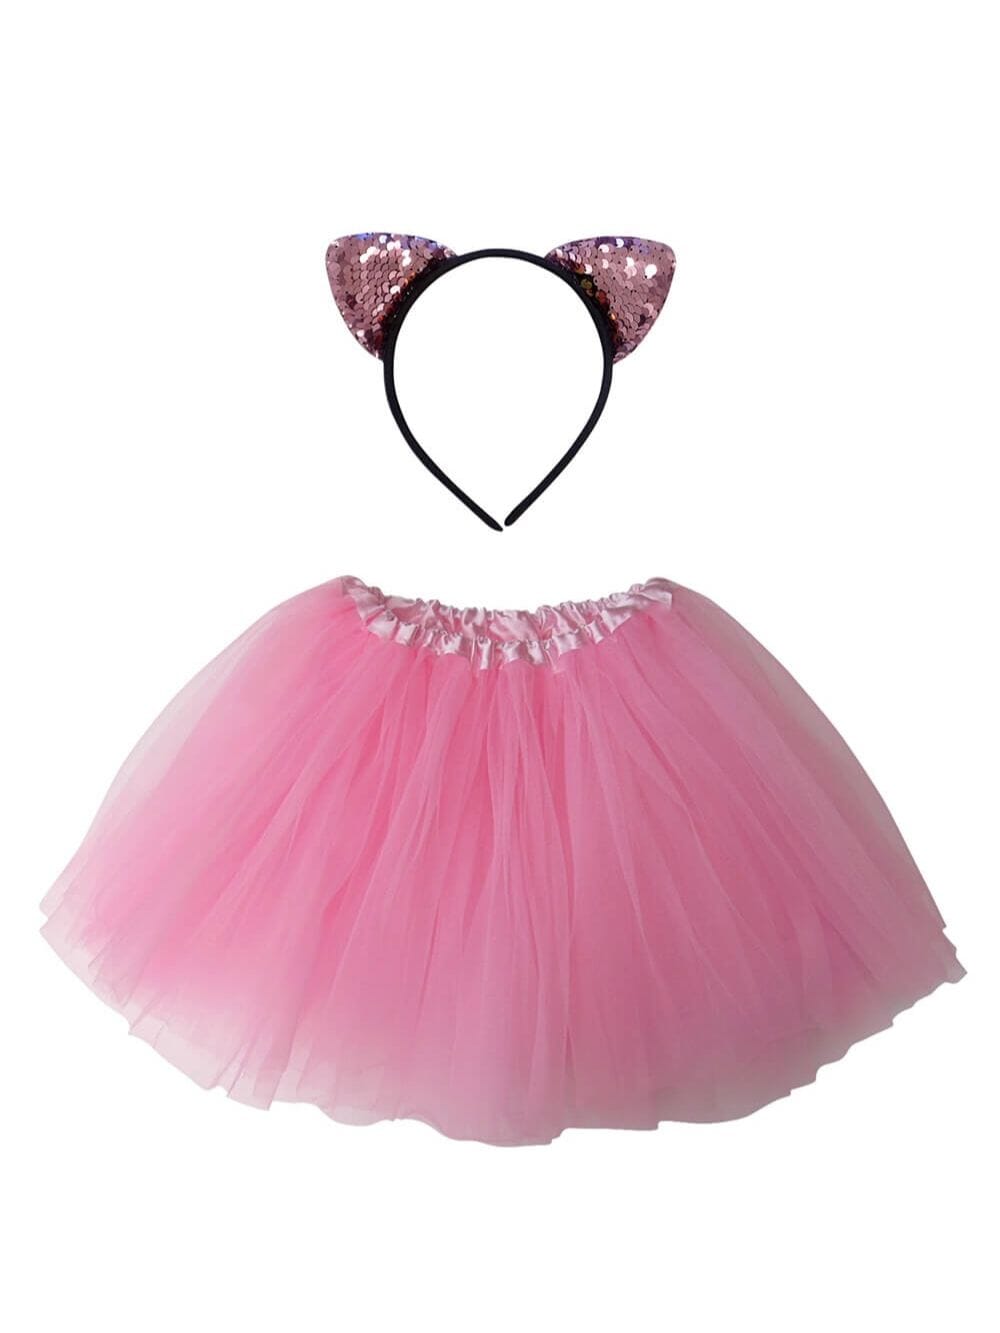 Girls Pink Cat Costume - Complete Kids Costume Set with Tutu & Flip Sequin Cat Ears Headband - Sydney So Sweet